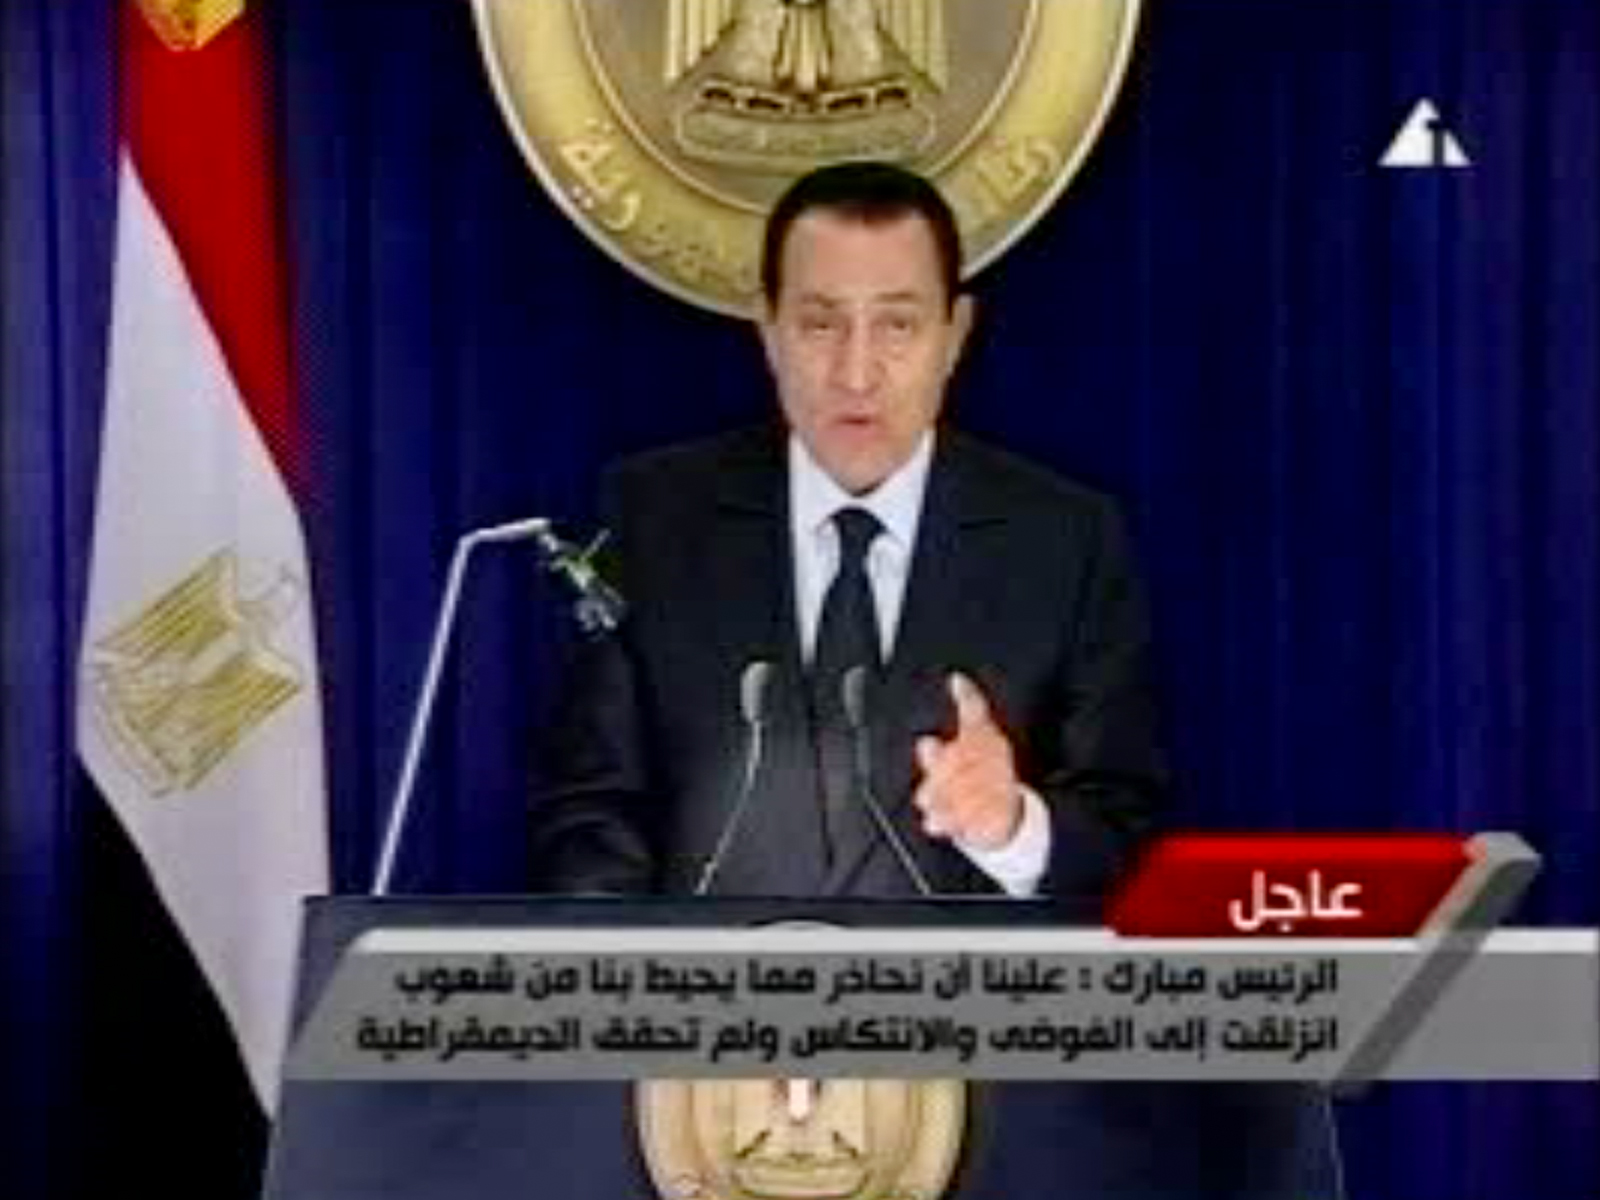 Diktatorn Mubarak fick till slut nog.